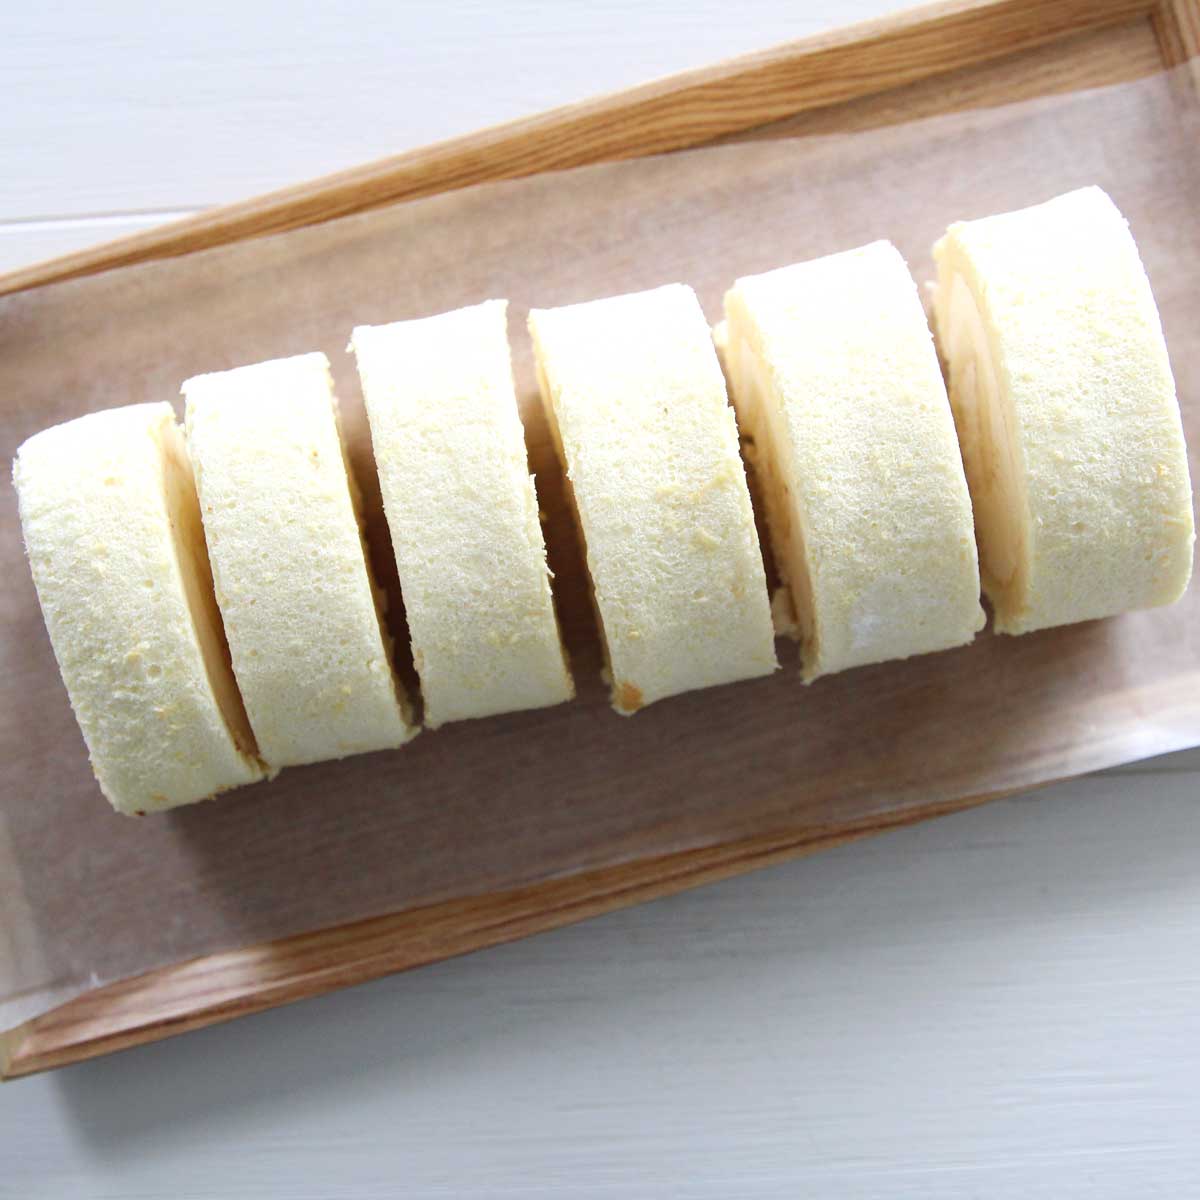 Unbelievably Soft Flourless Vanilla Swiss Roll Cake (Gluten-Free) - Greek Yogurt Scones